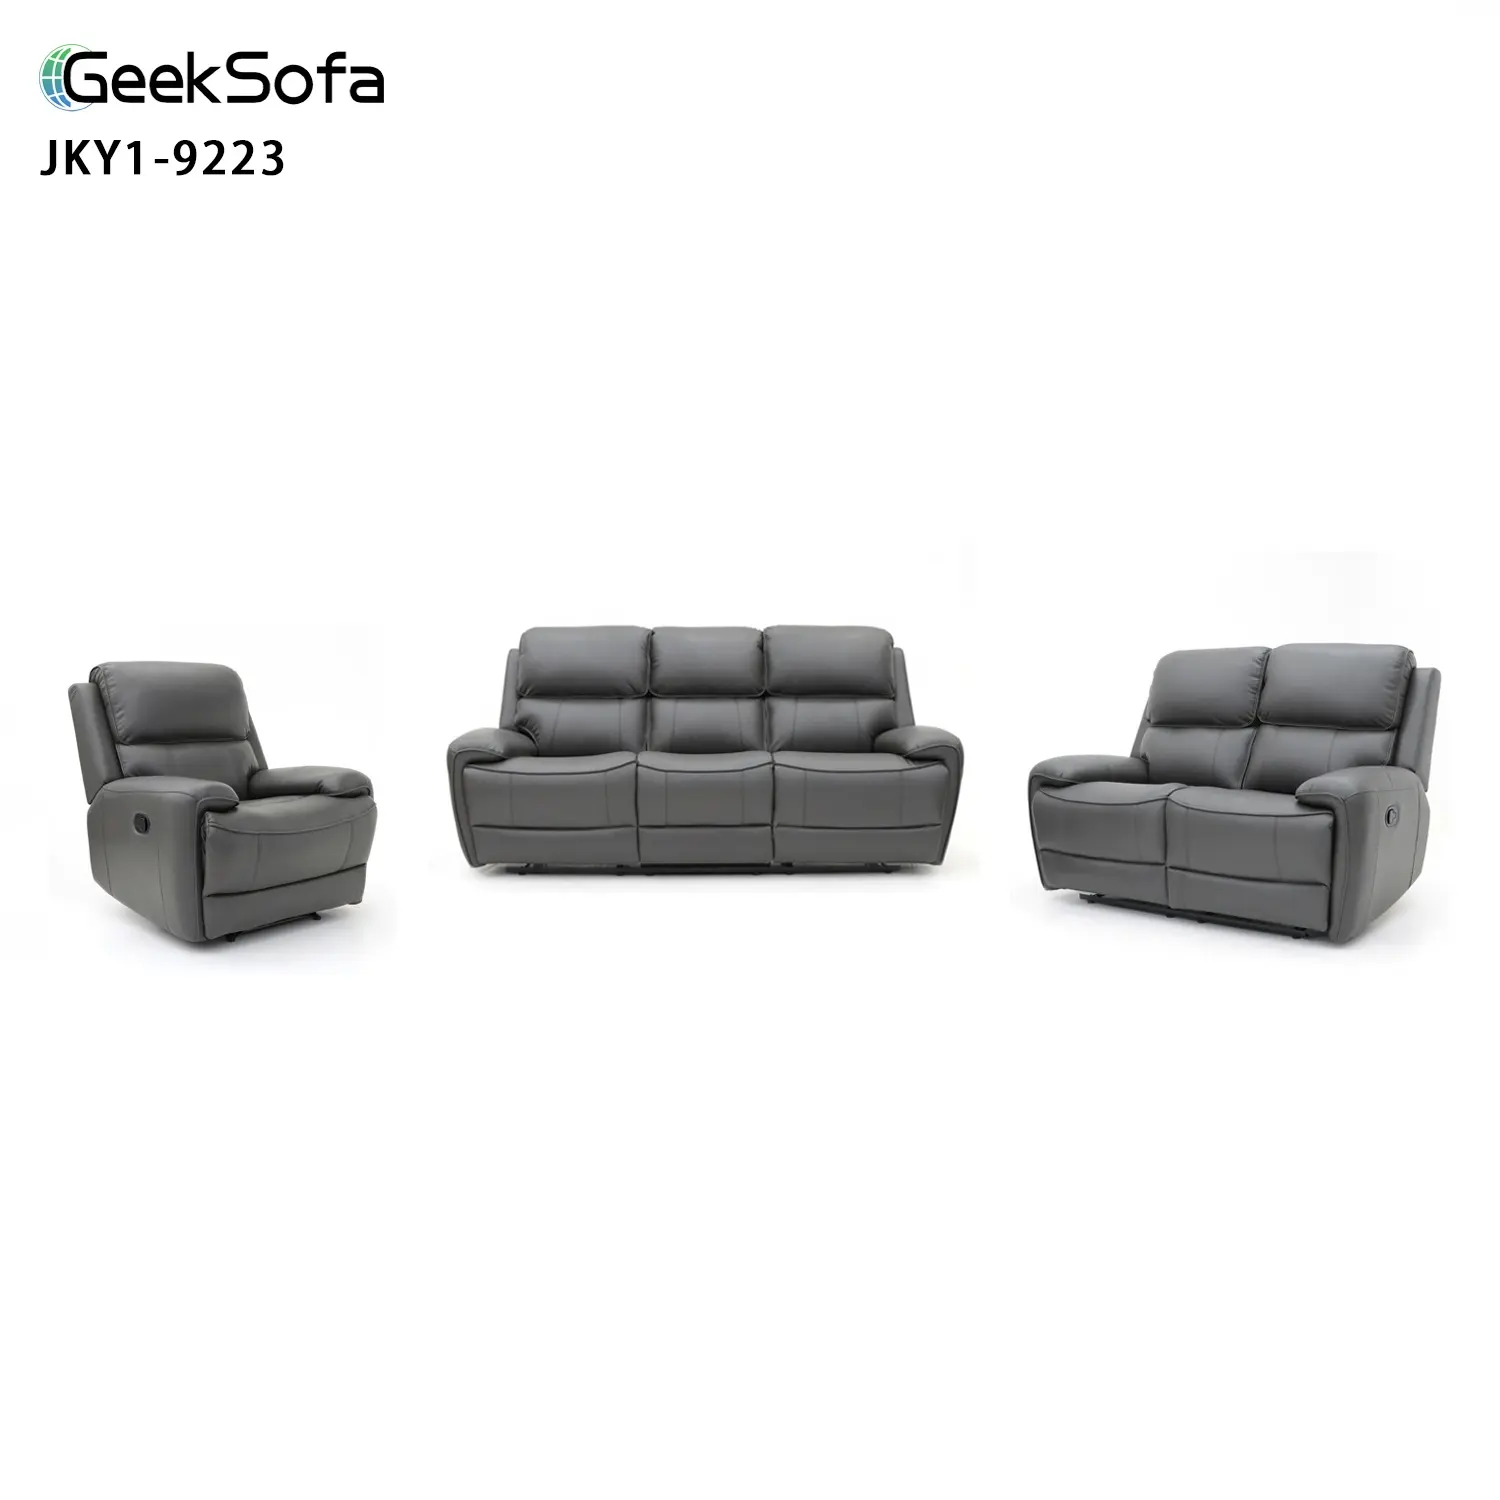 Geeksofa المصنع الجملة 3+2+1 الحديثة هواء جلد دليل الحركة كرسي الاستلقاء مجموعة لغرفة المعيشة الأثاث